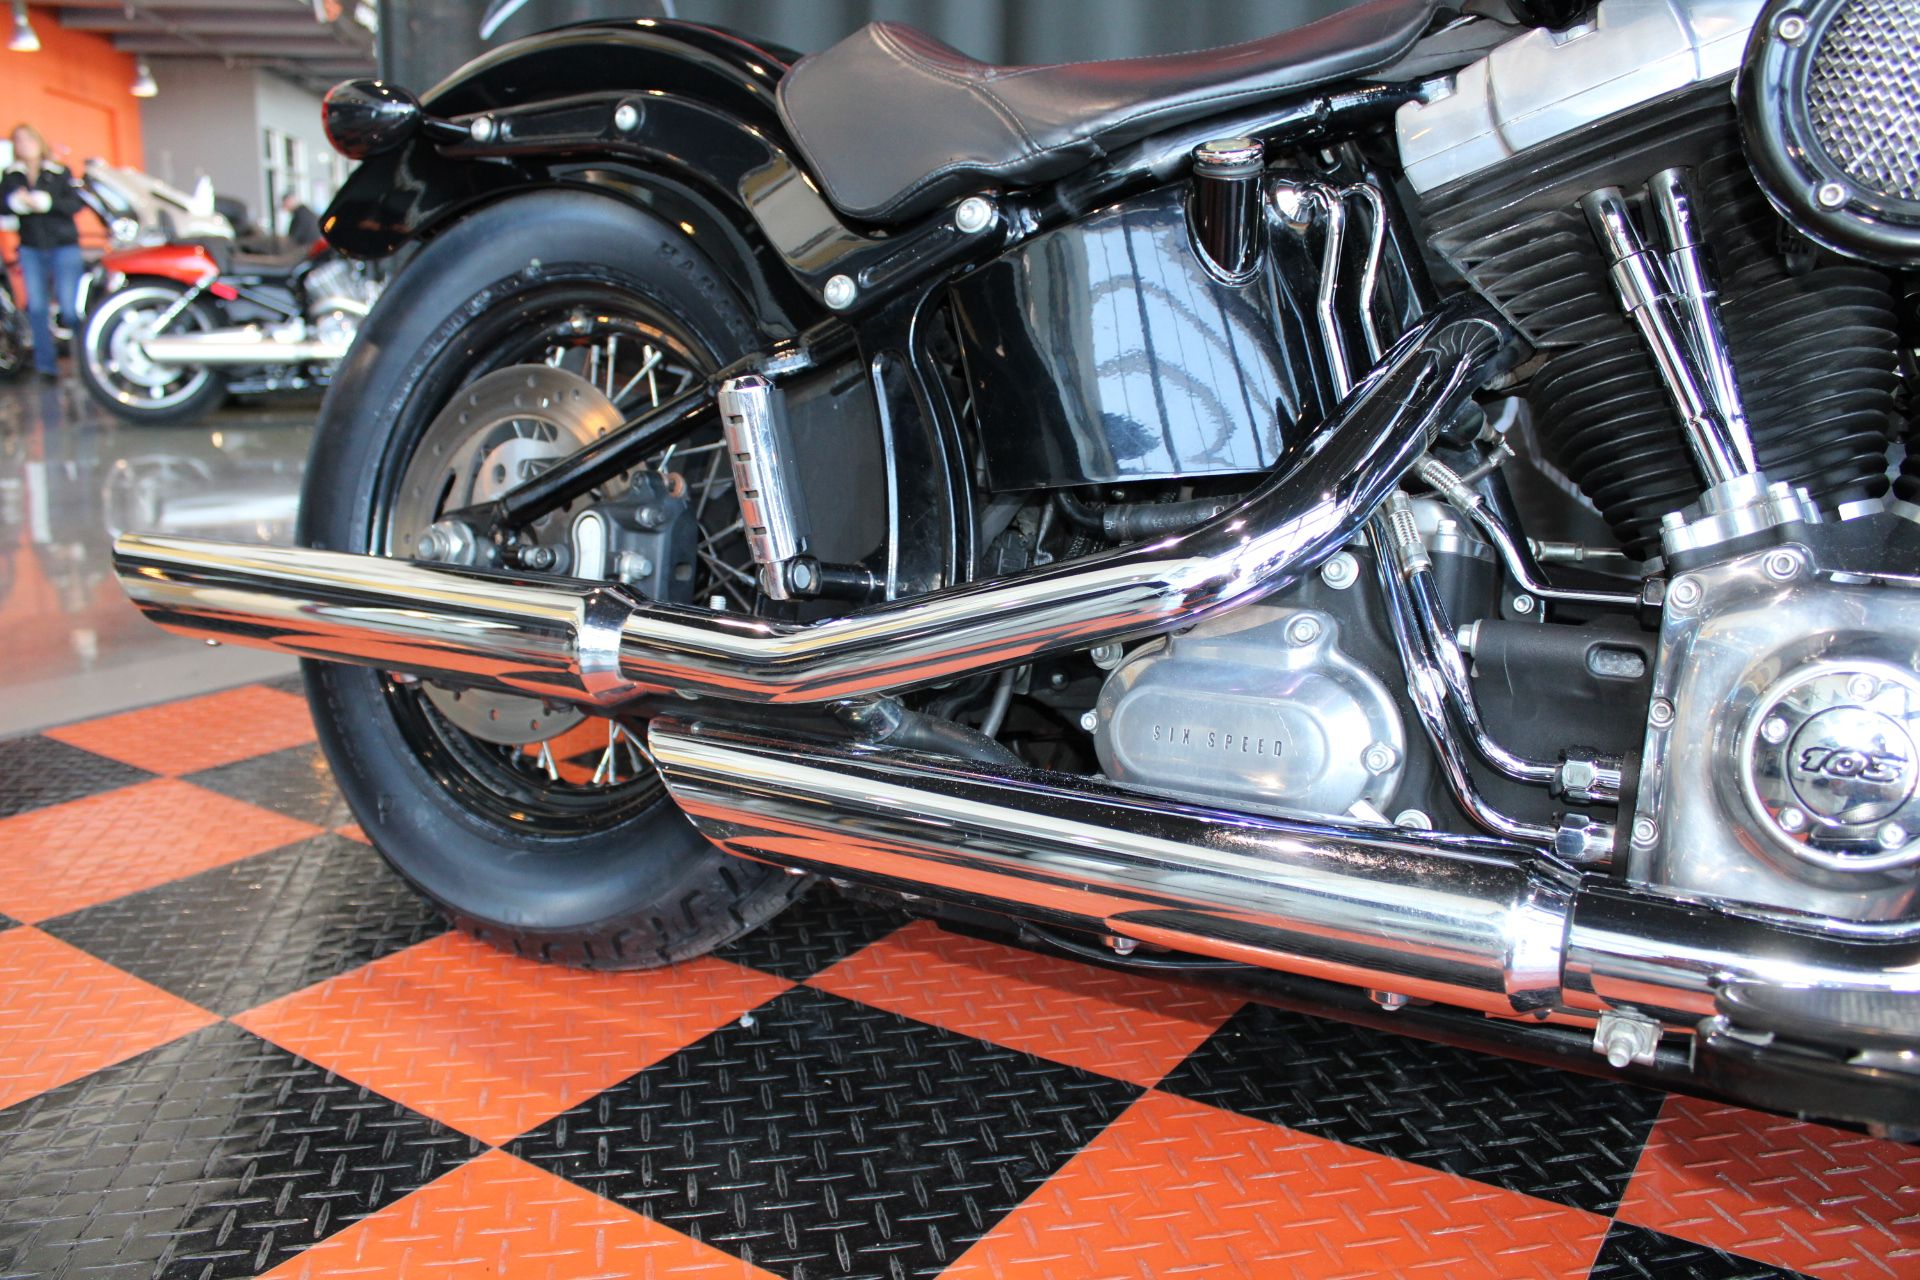 2013 Harley-Davidson Softail Slim® in Shorewood, Illinois - Photo 8